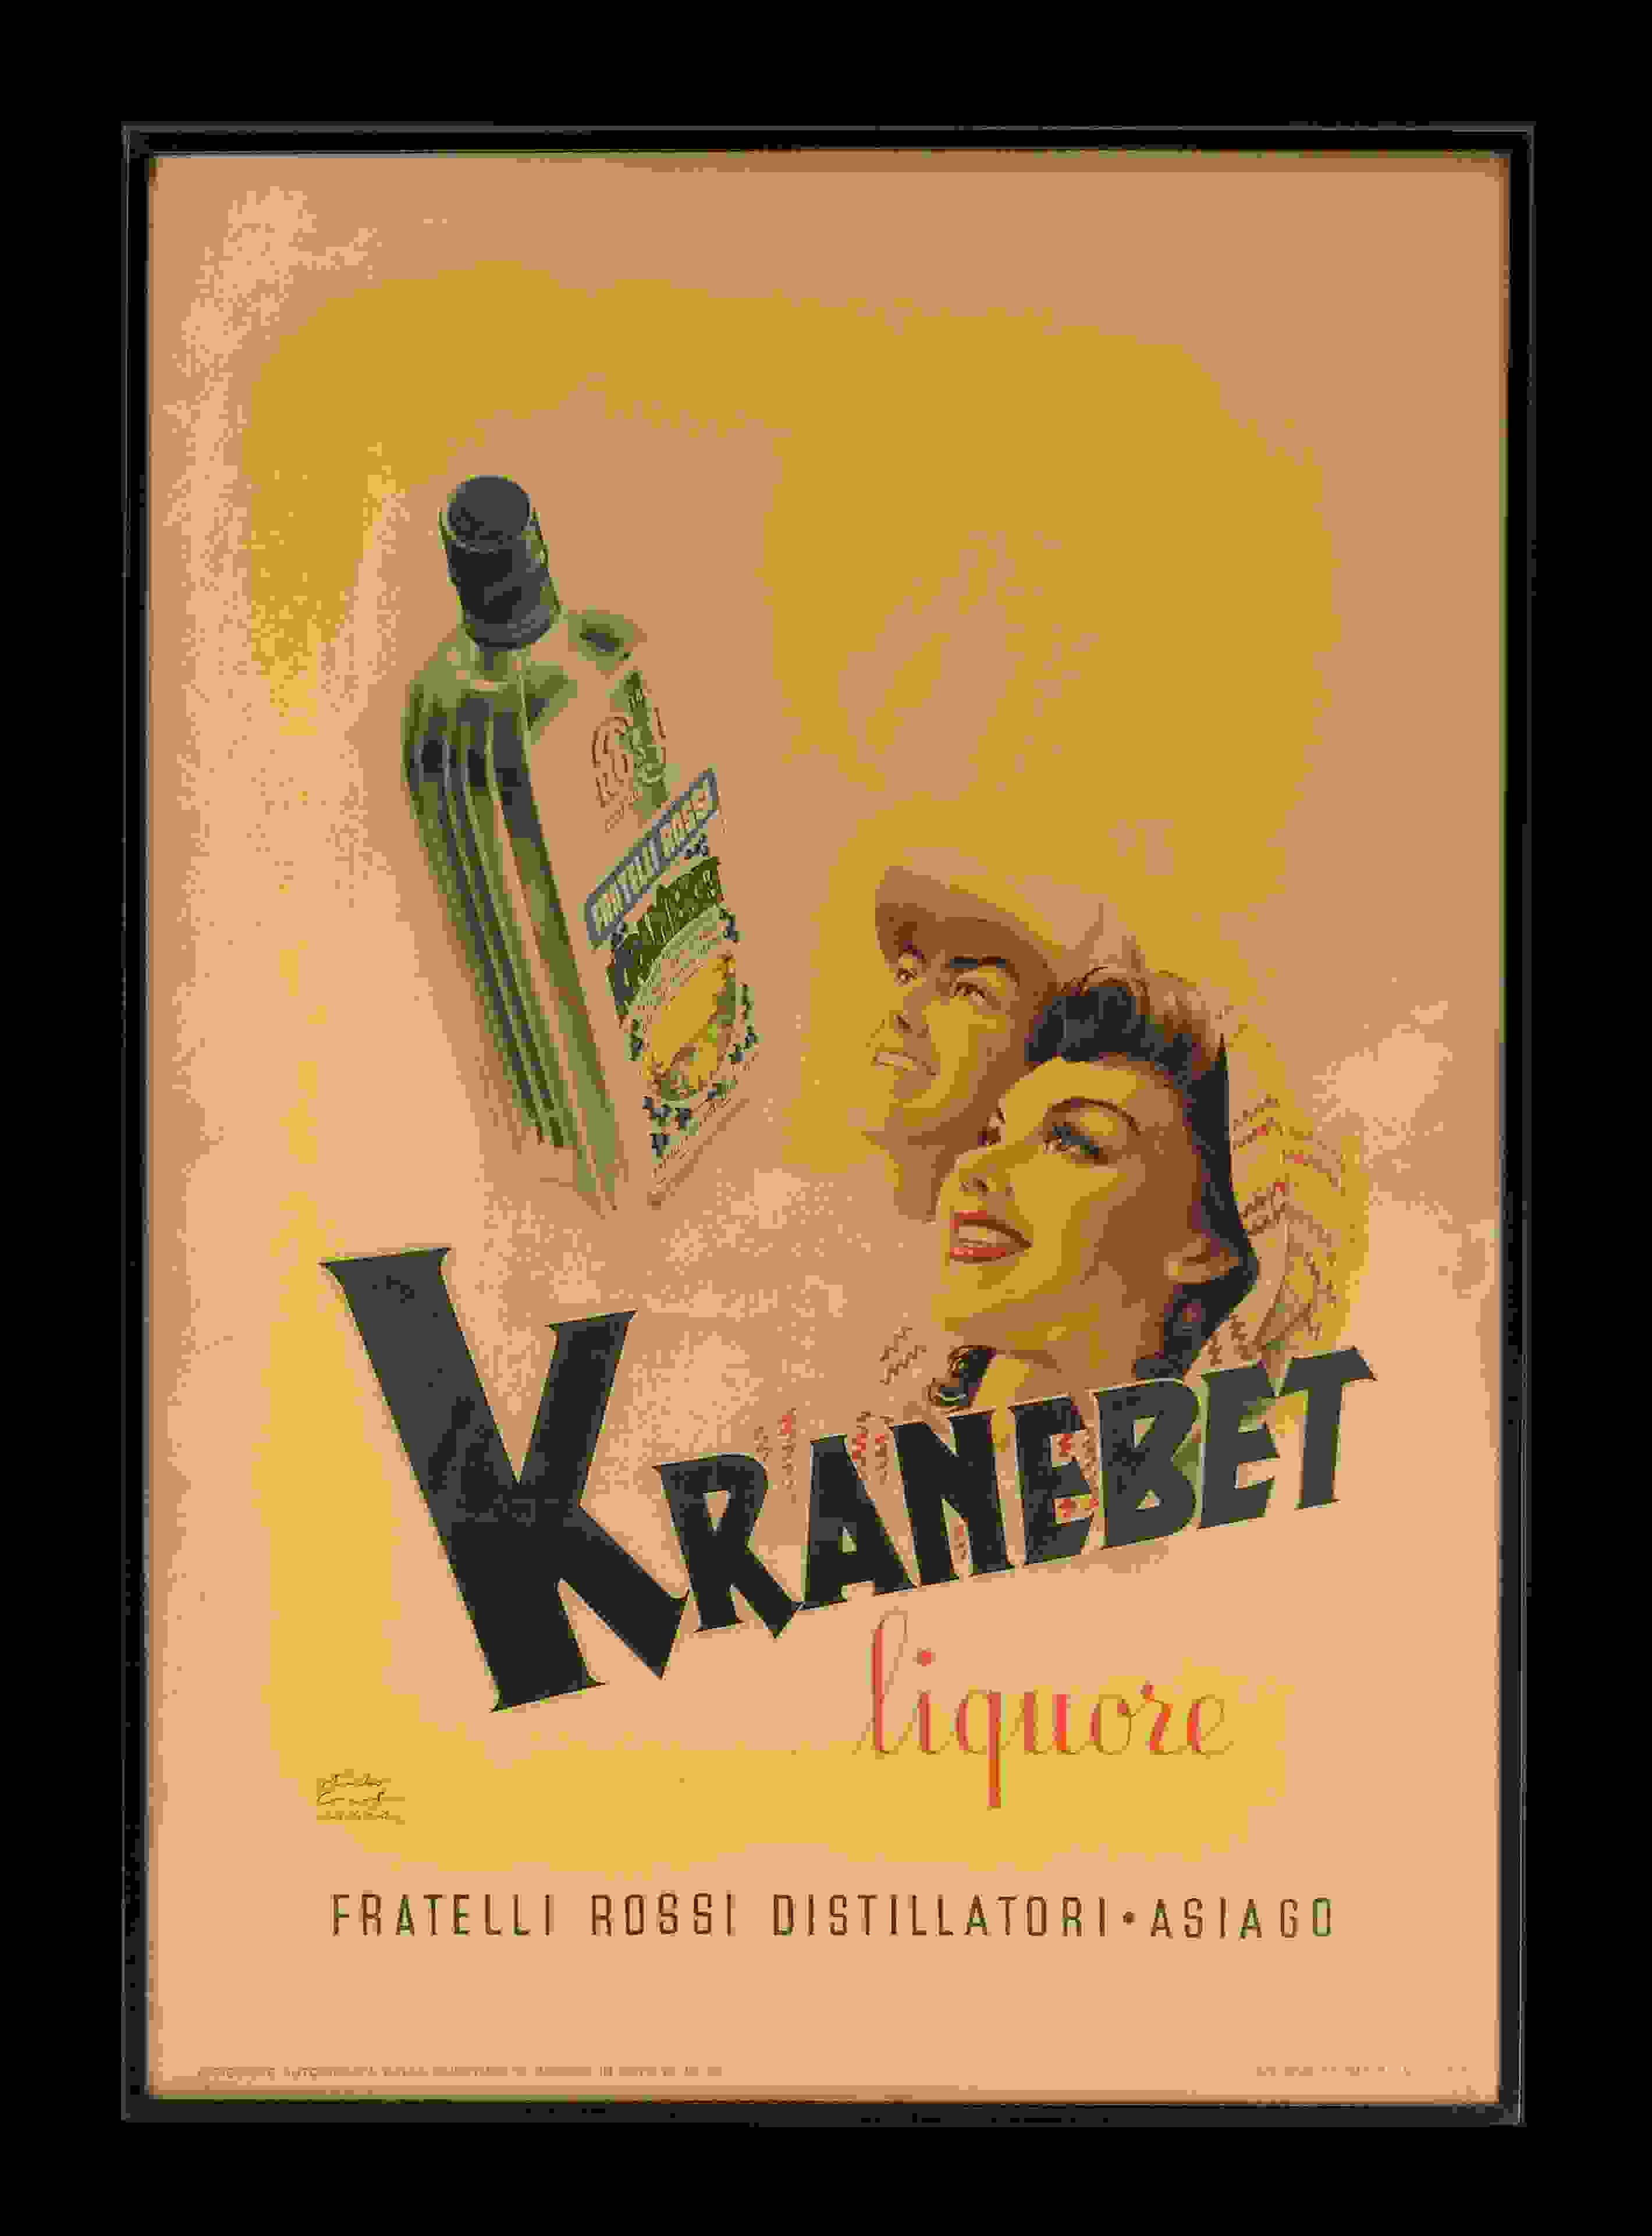 Kranebet liquore 